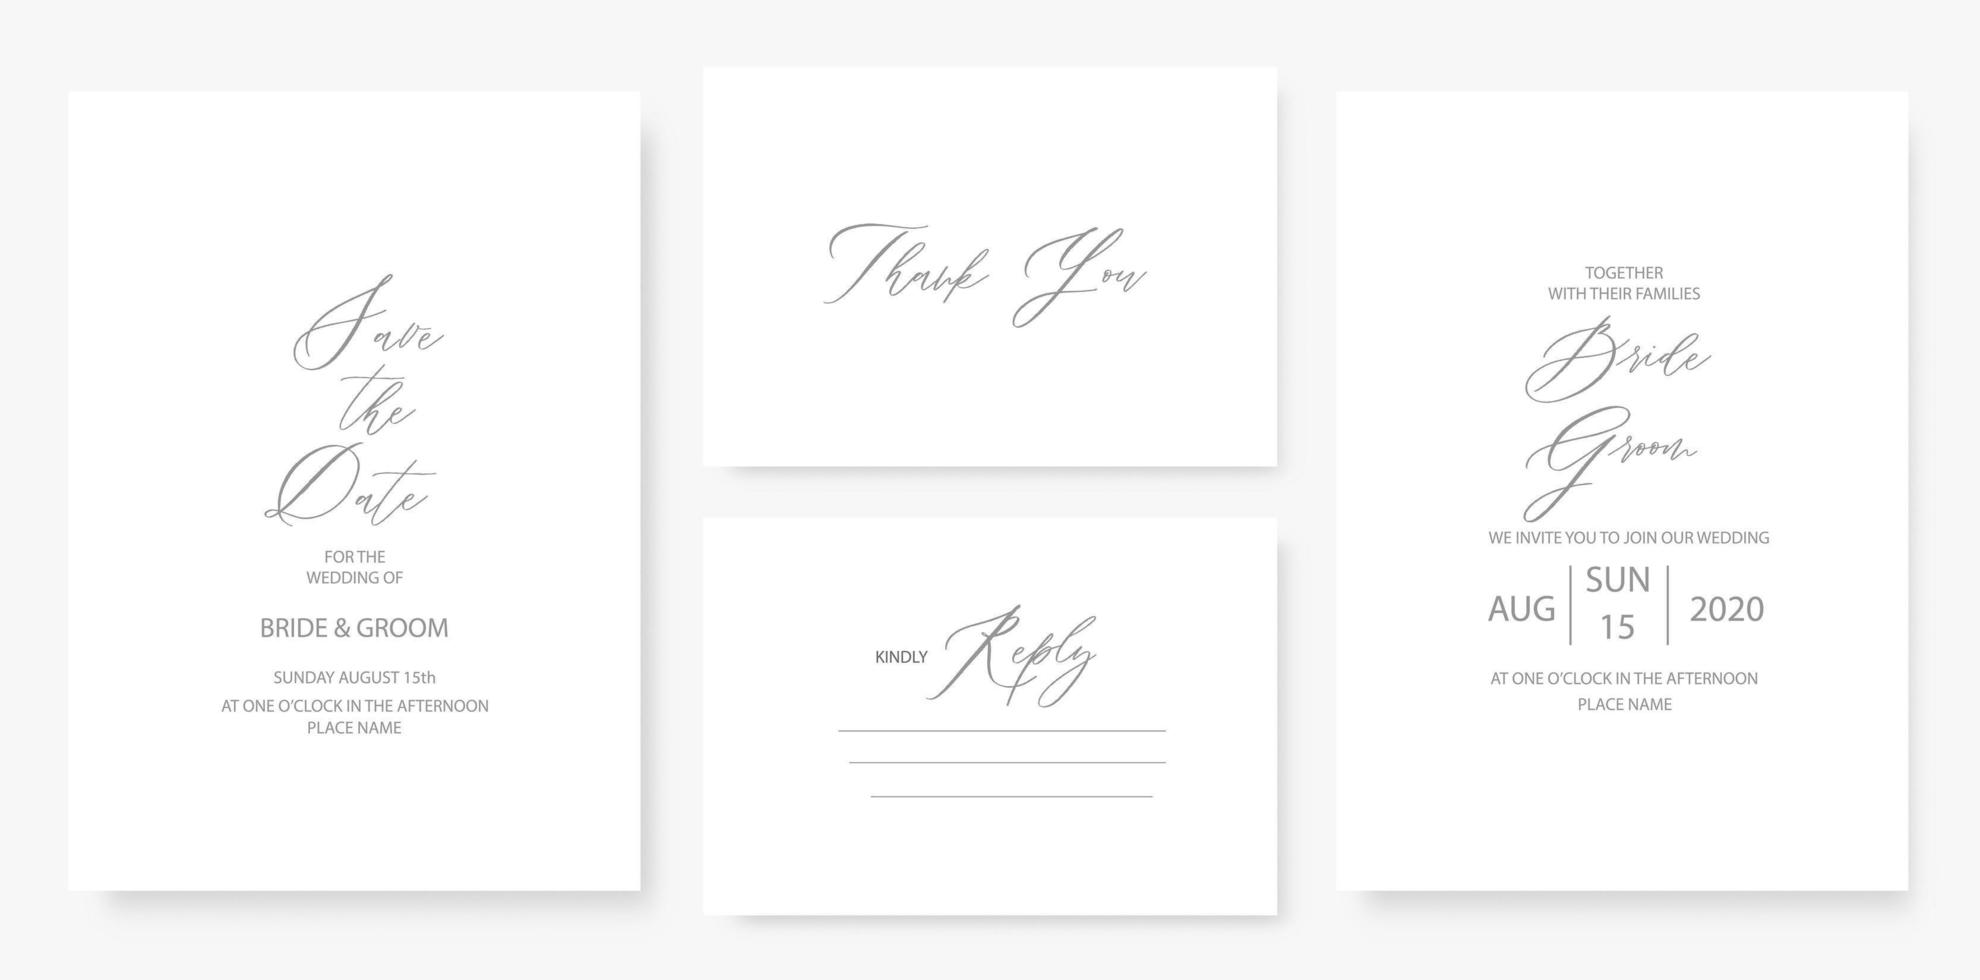 Wedding invitation - empty template cards. Minimalizm style. vector